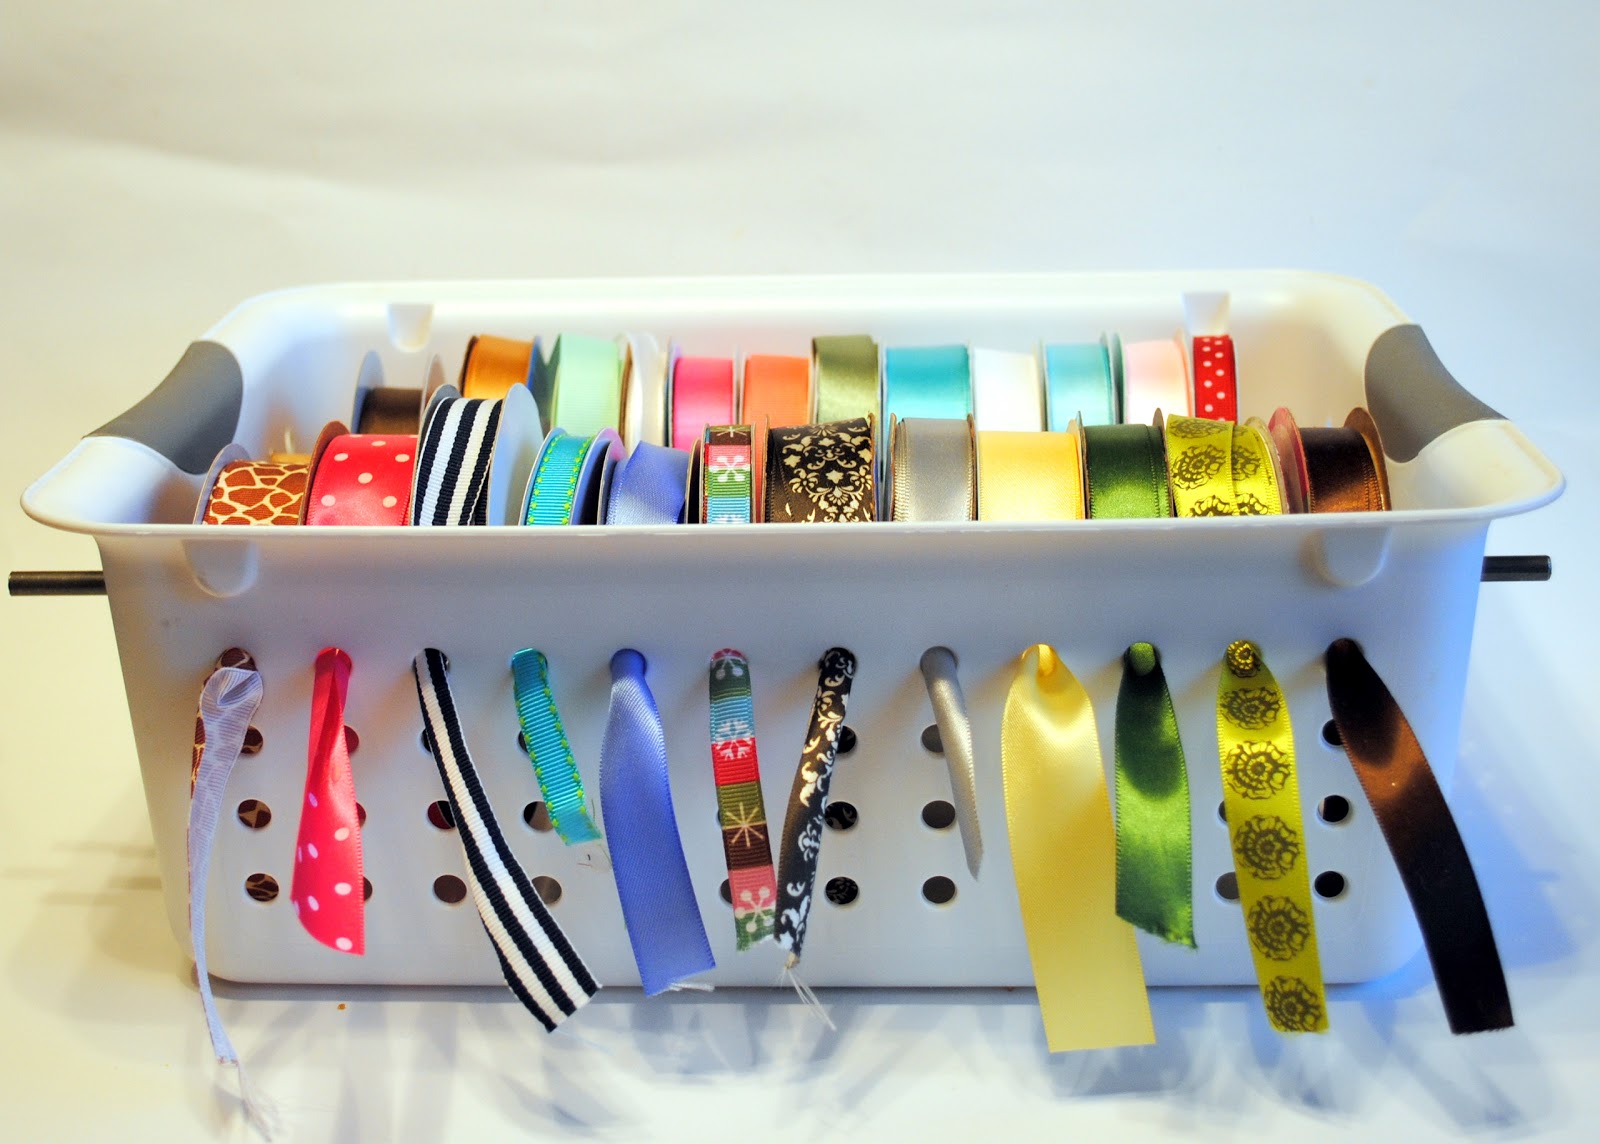 DIY Projects - Hair tie storage :)